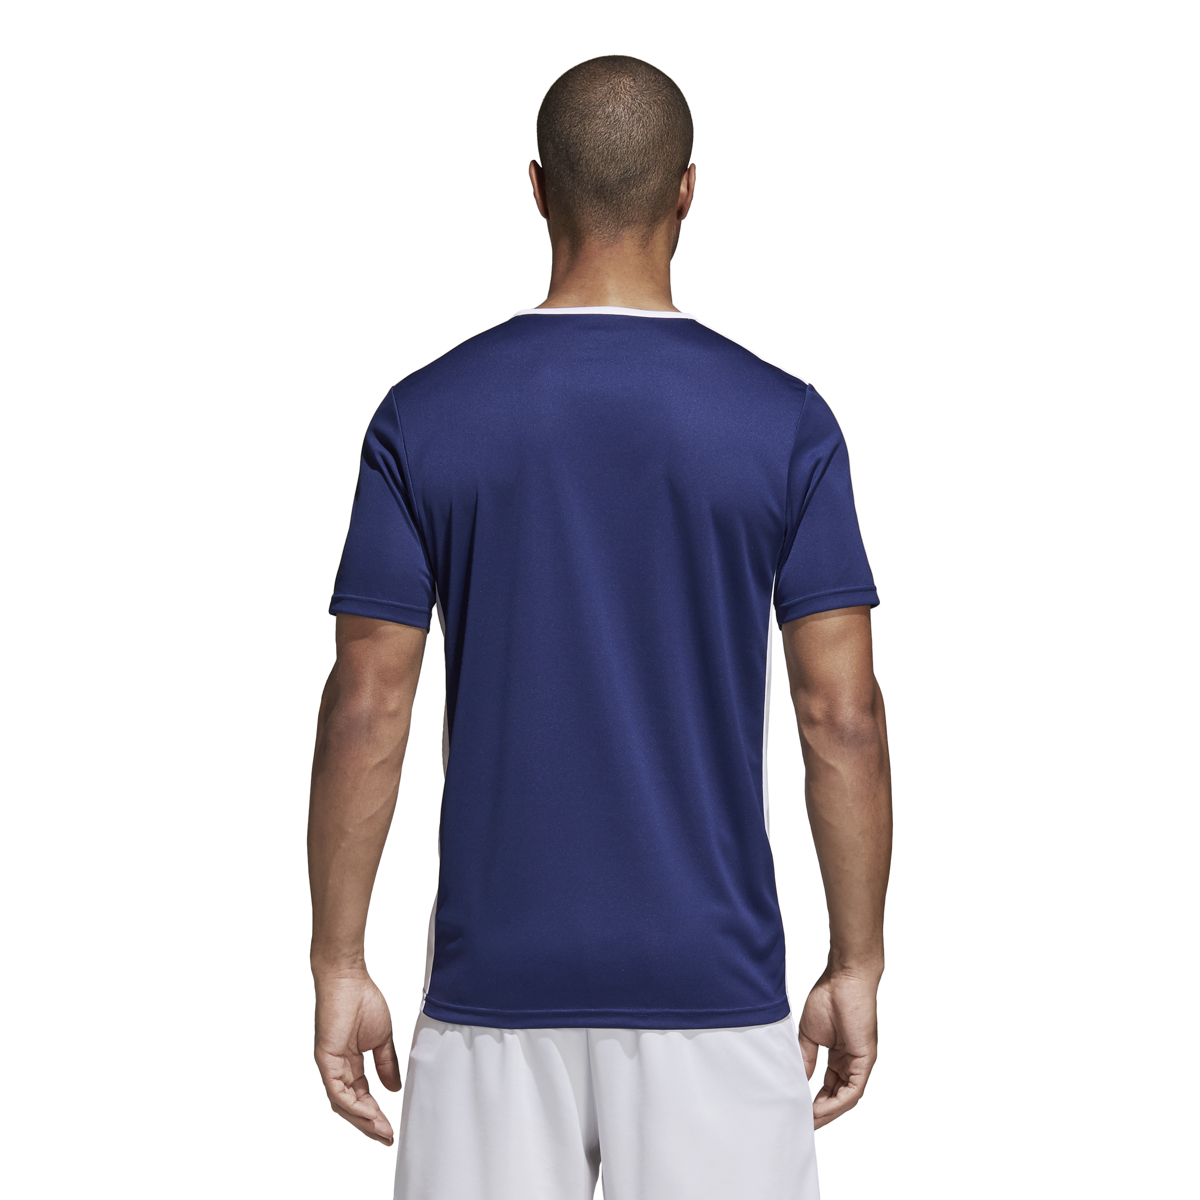 Adidas DARK BLUE/WHITE Men's Entrada ClimaLite Soccer Shirt, US Small - image 2 of 6